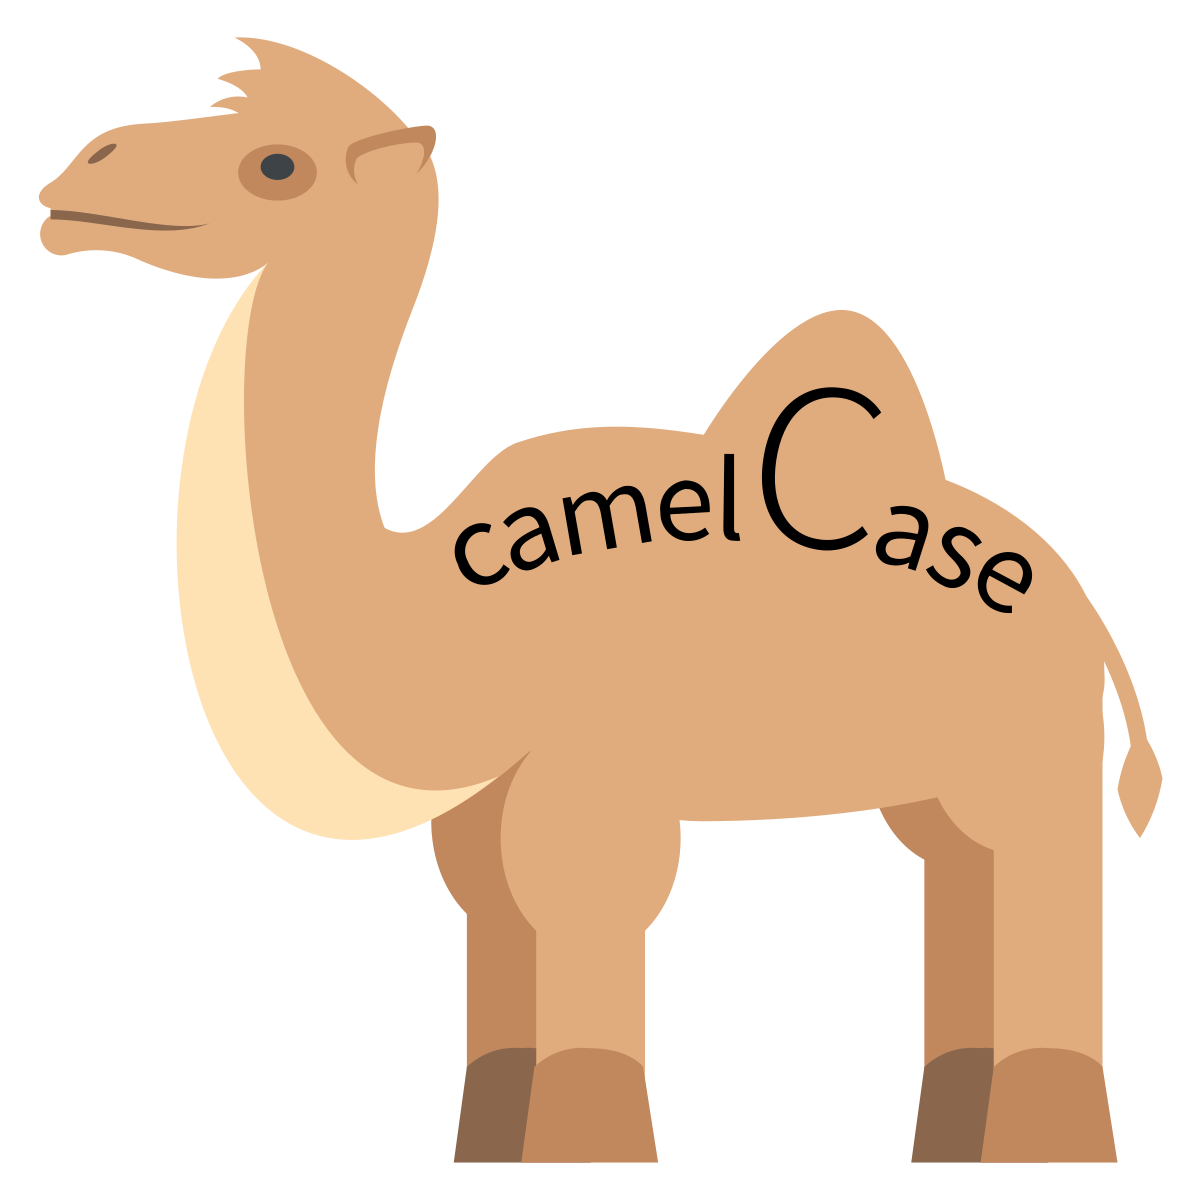 Camel case wikipedia.